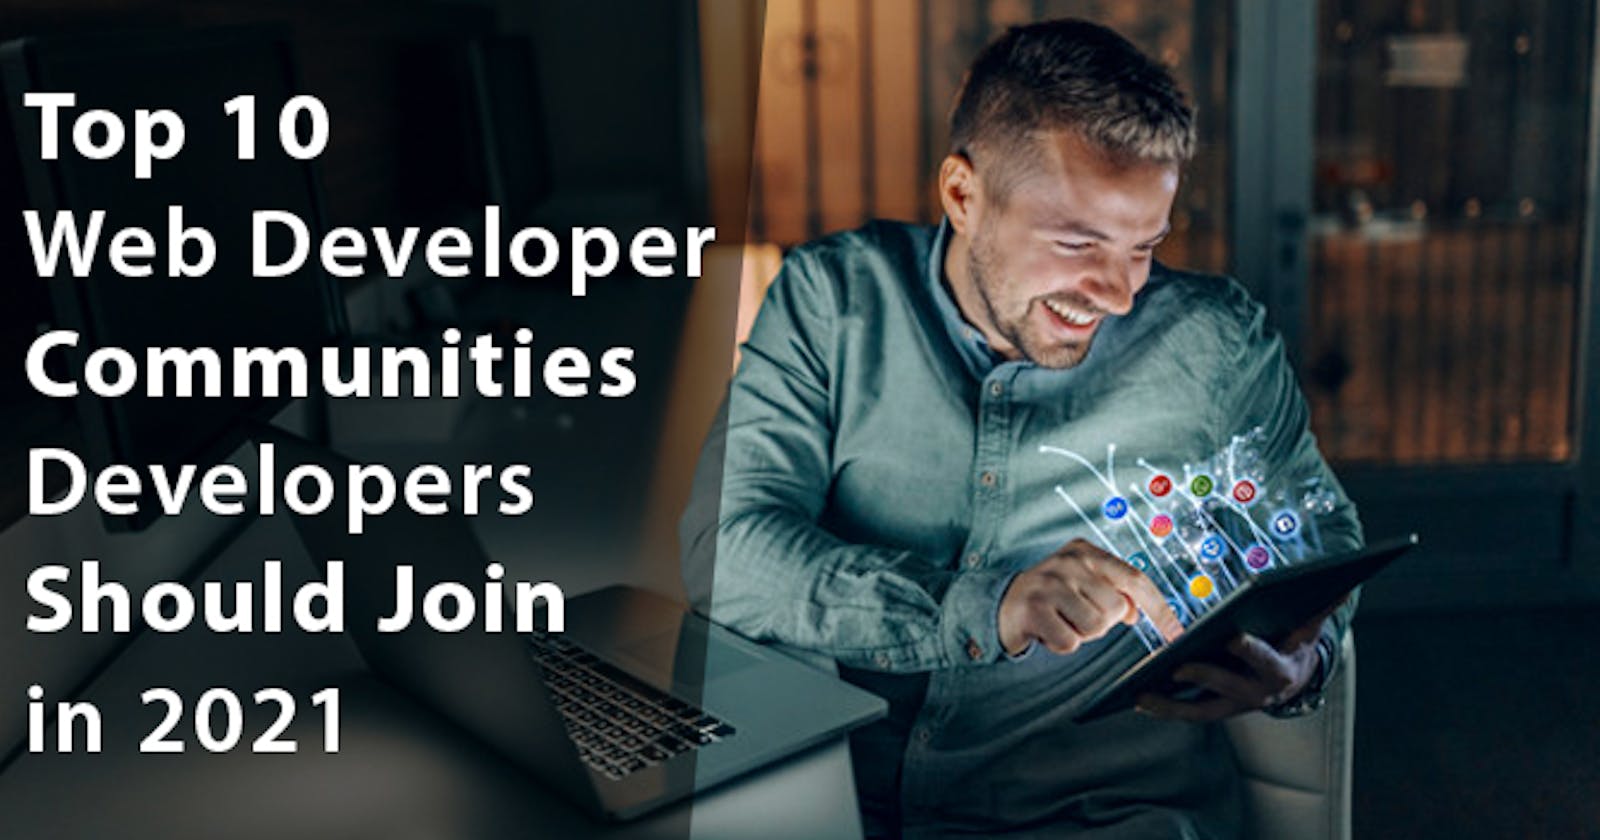 Top 10 Web Developer Communities Developers Should Join